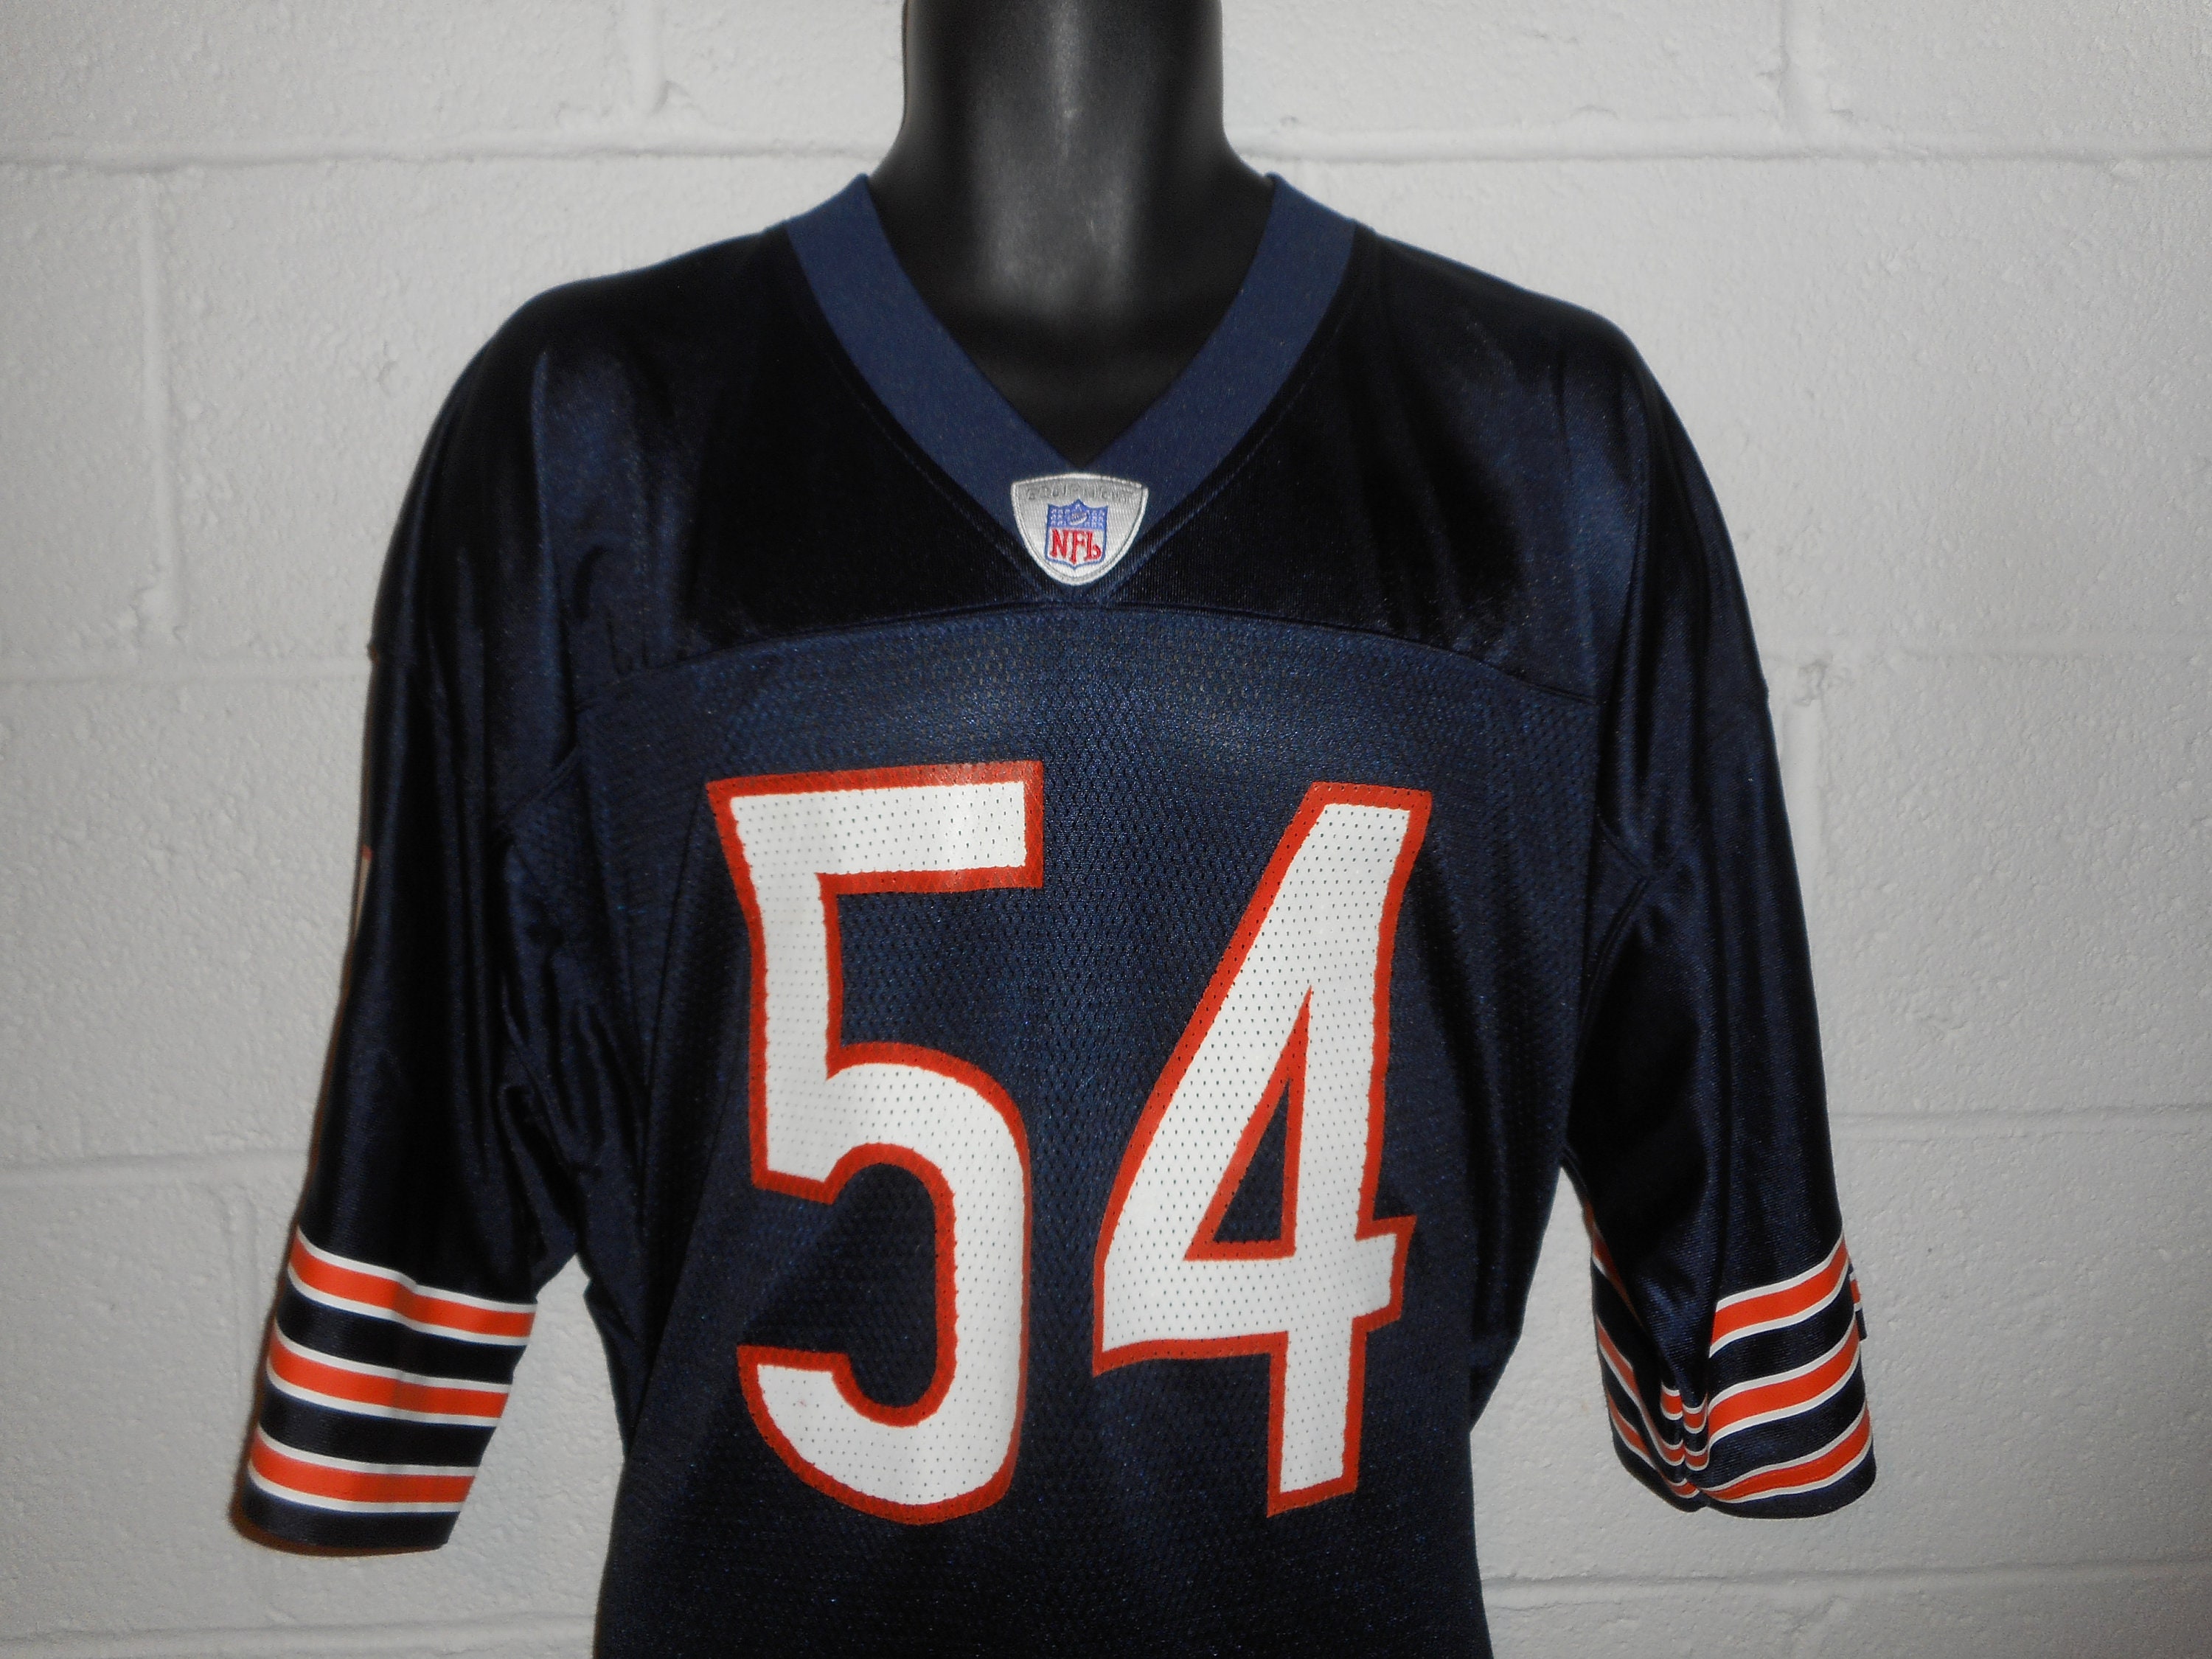 54 bears jersey